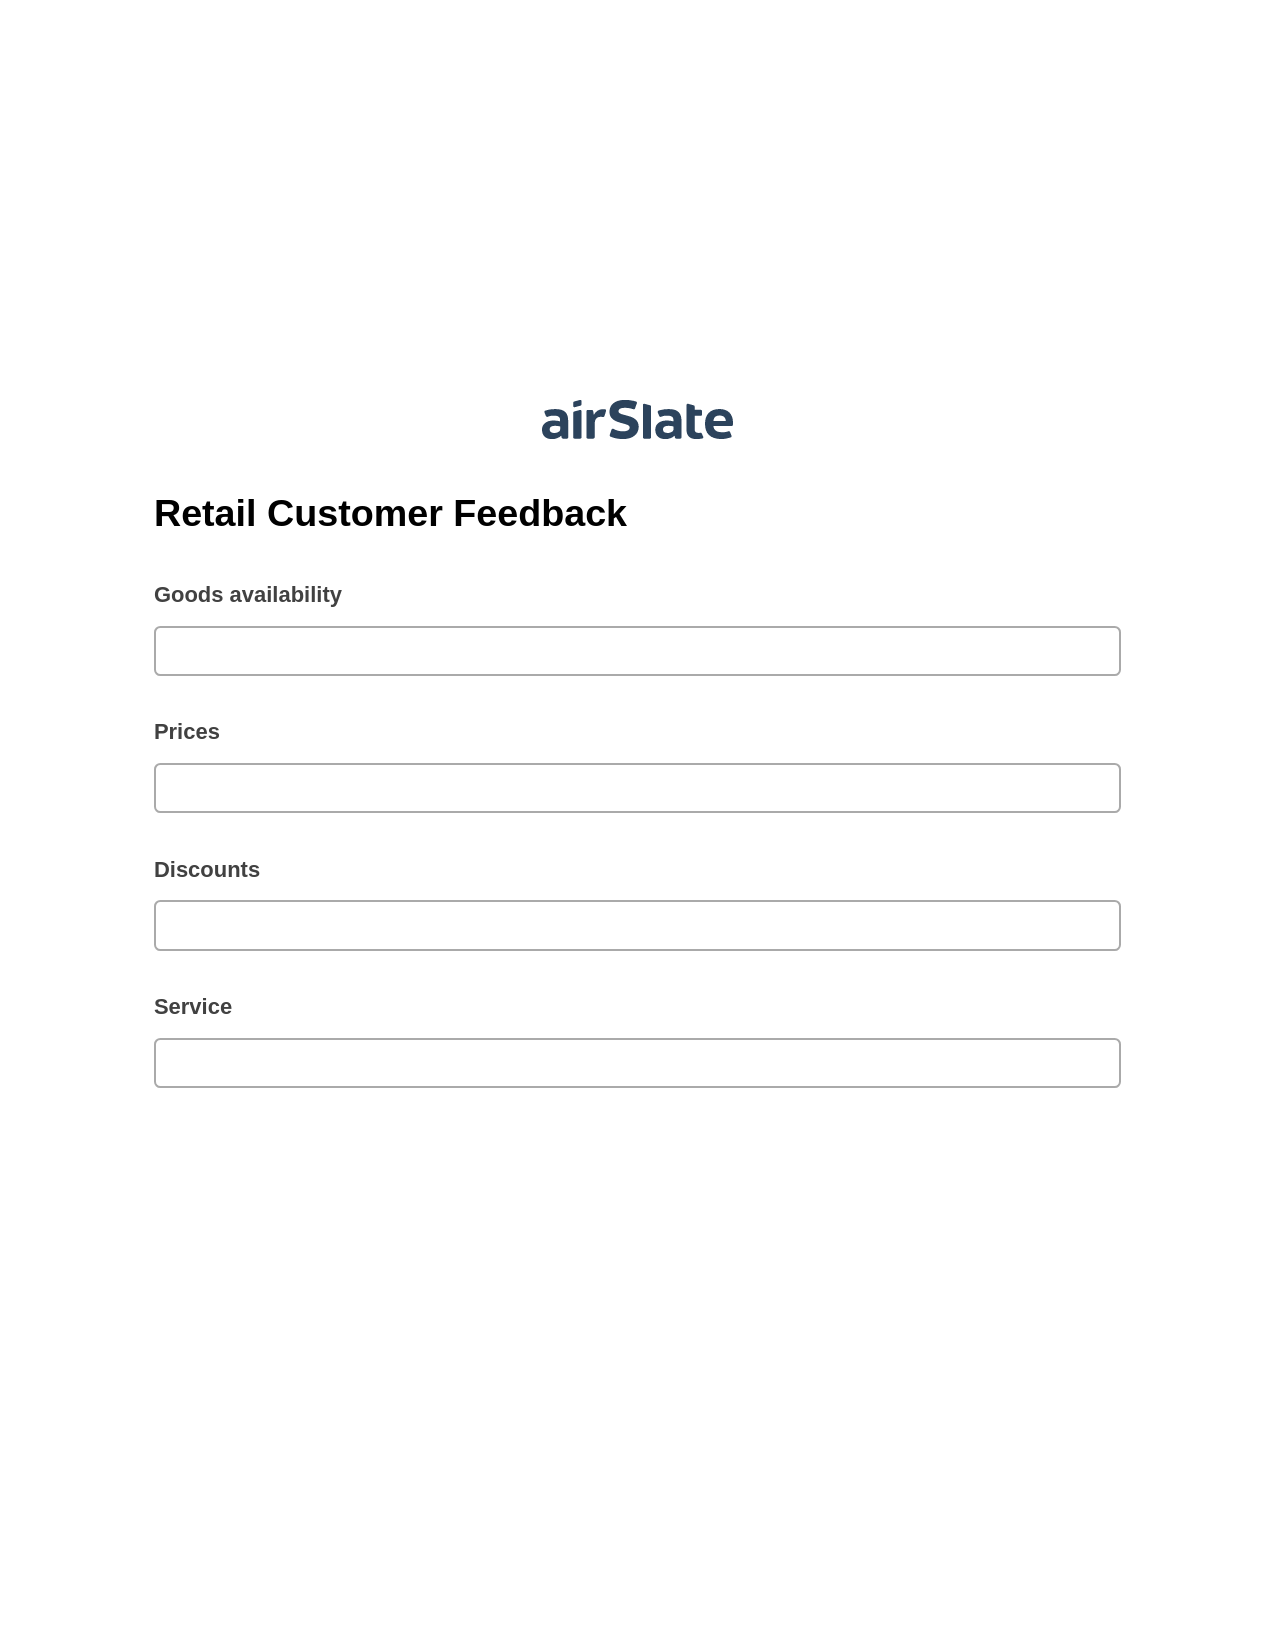 Retail Customer Feedback Pre-fill from NetSuite Records Bot, Reminder Bot, Webhook Postfinish Bot